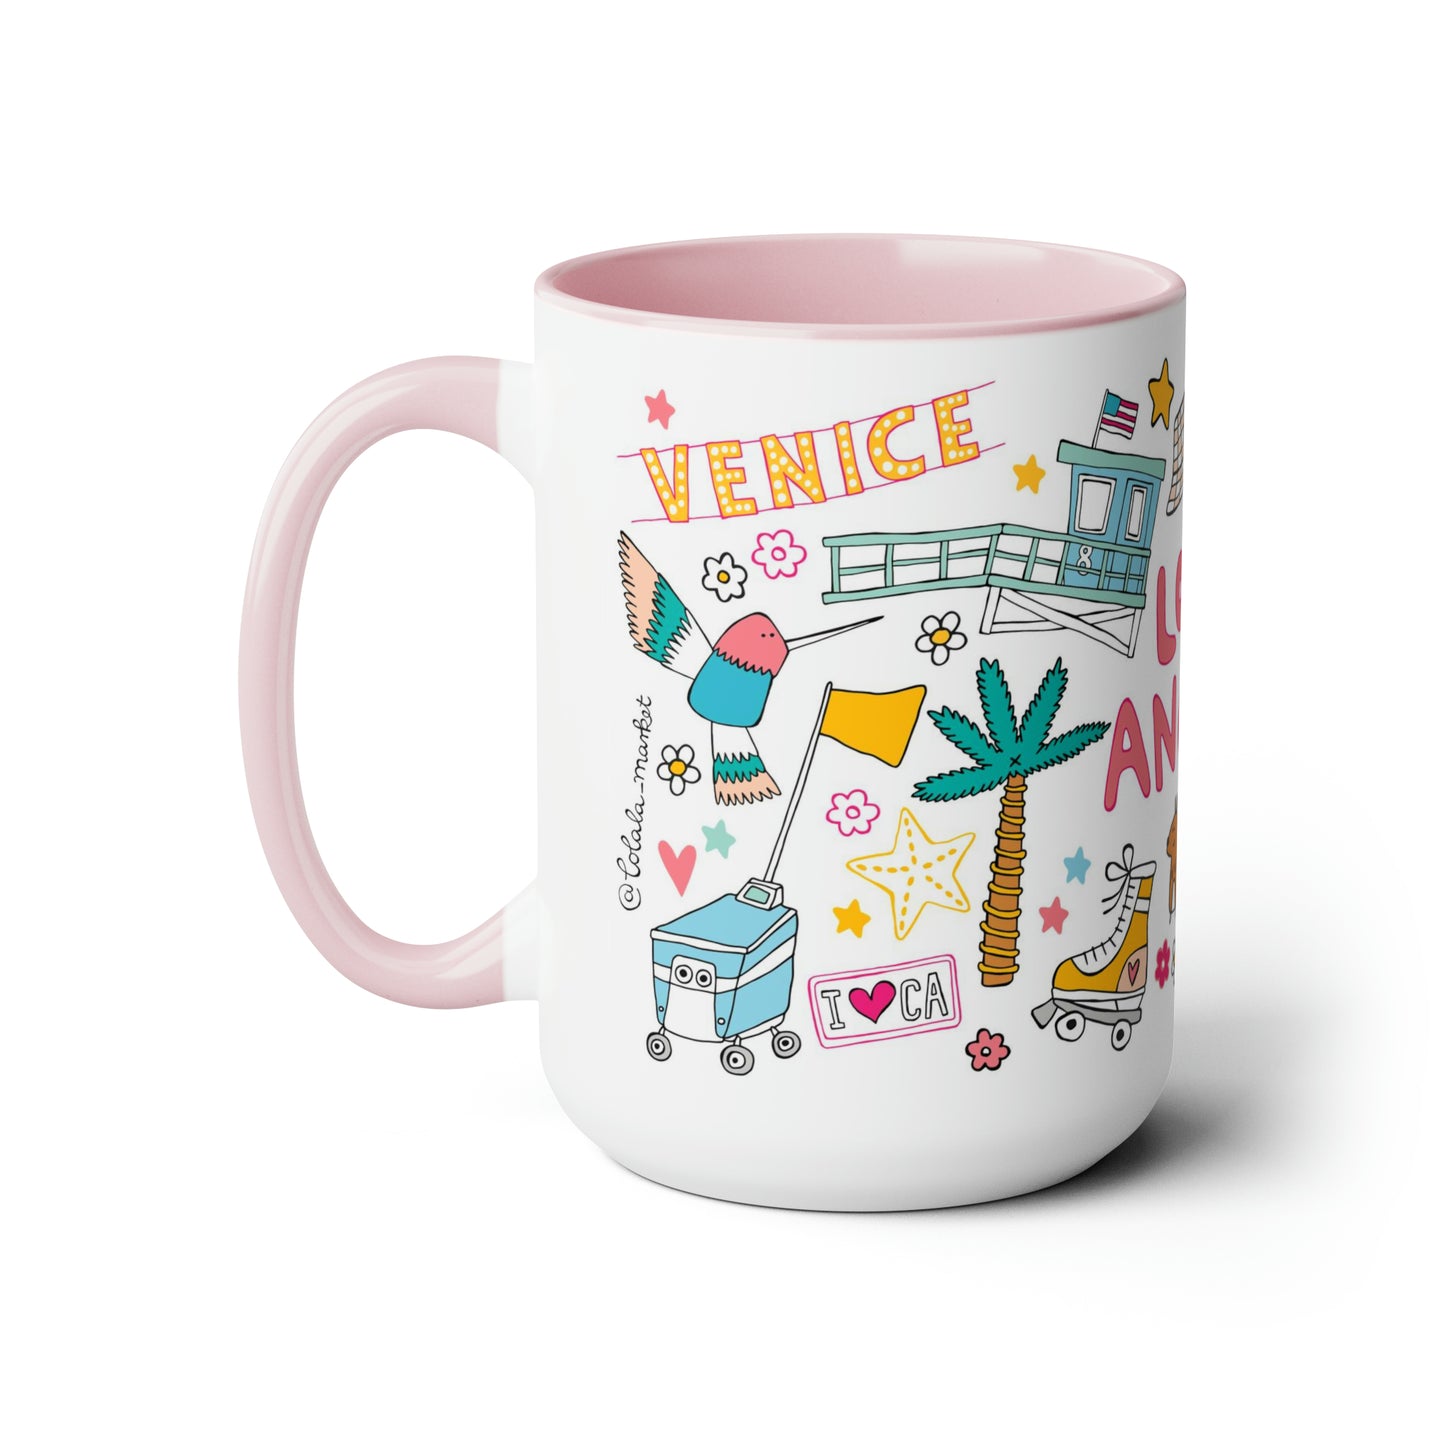 Los Angeles - *BIG* Coffee Mug (15oz, pink)